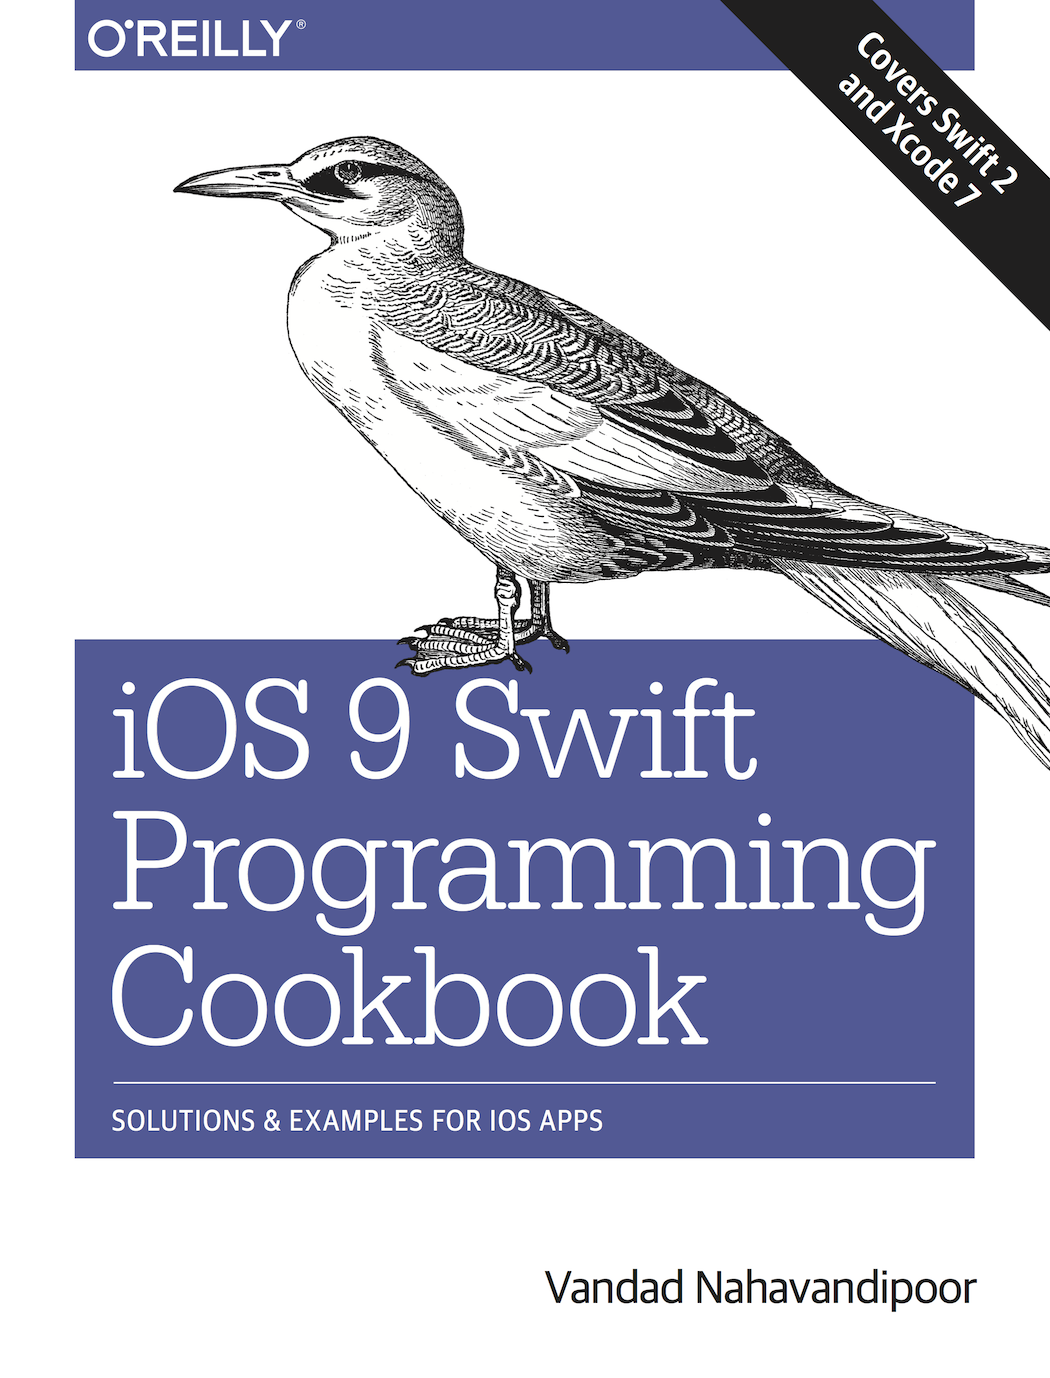 iOS 9 Swift Programming Cookbook's Logo Image